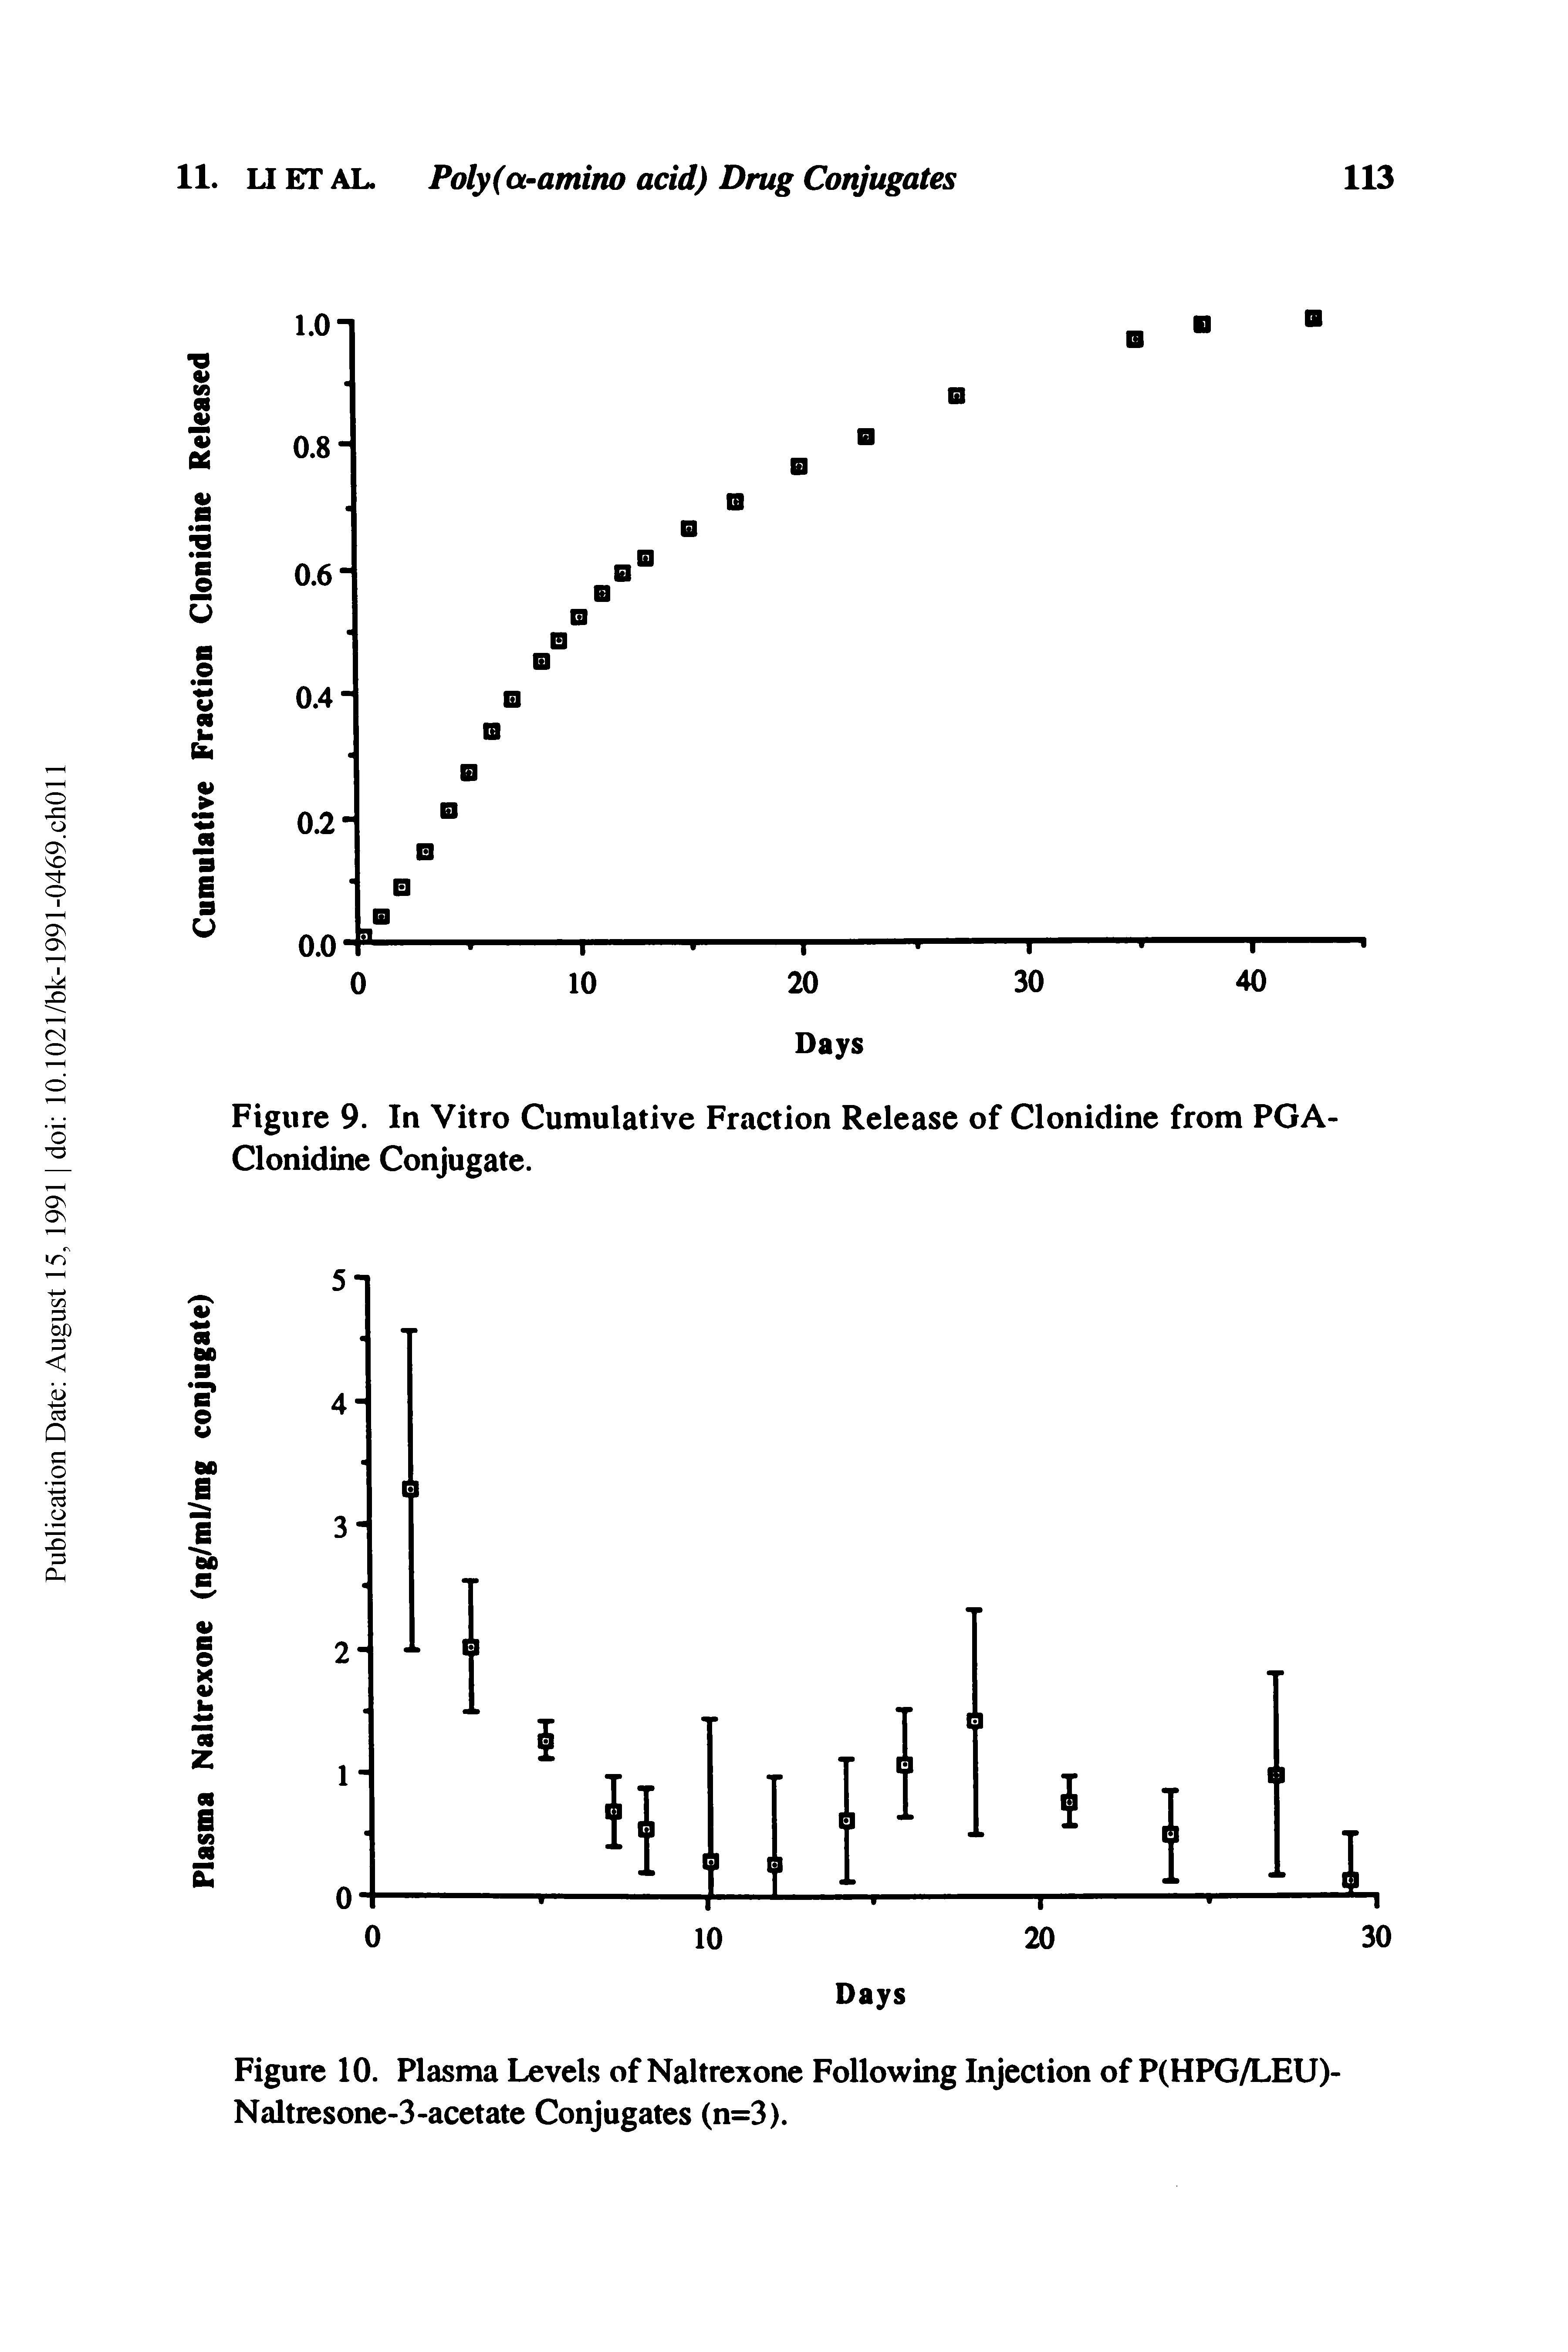 Figure 10. Plasma Levels of Naltrexone Following Injection of P(HPG/LEU)-Naltresone-3-acetate Conjugates (n=3).